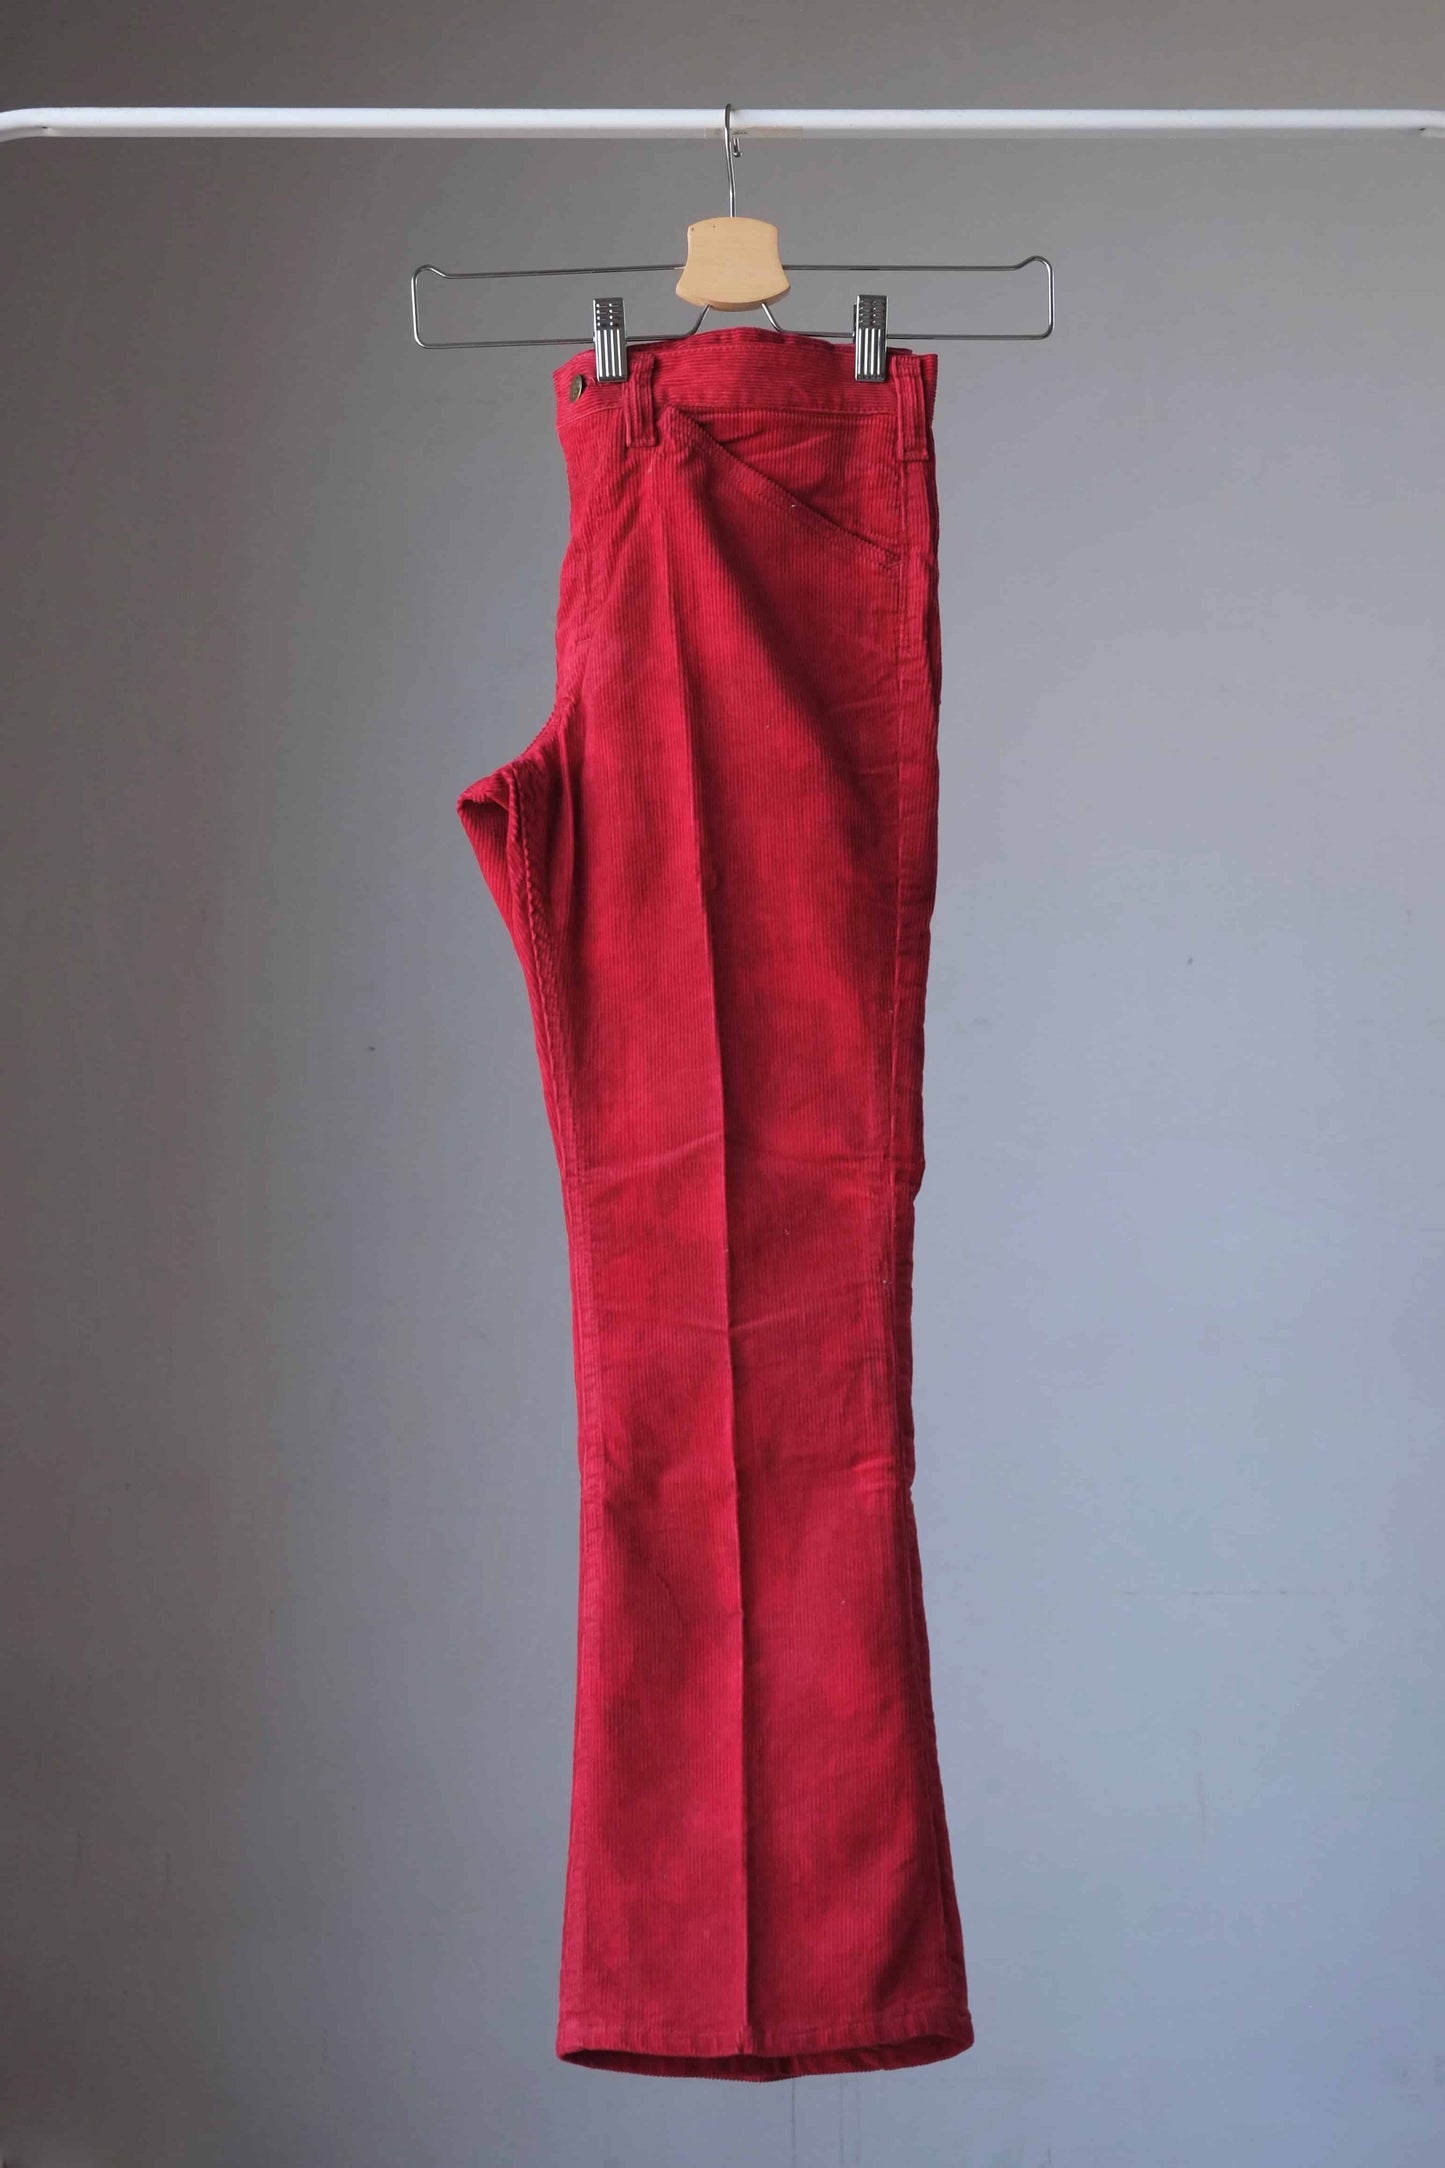 LEE Corduroy Tie-Dye 70's Bell Bottoms red left side